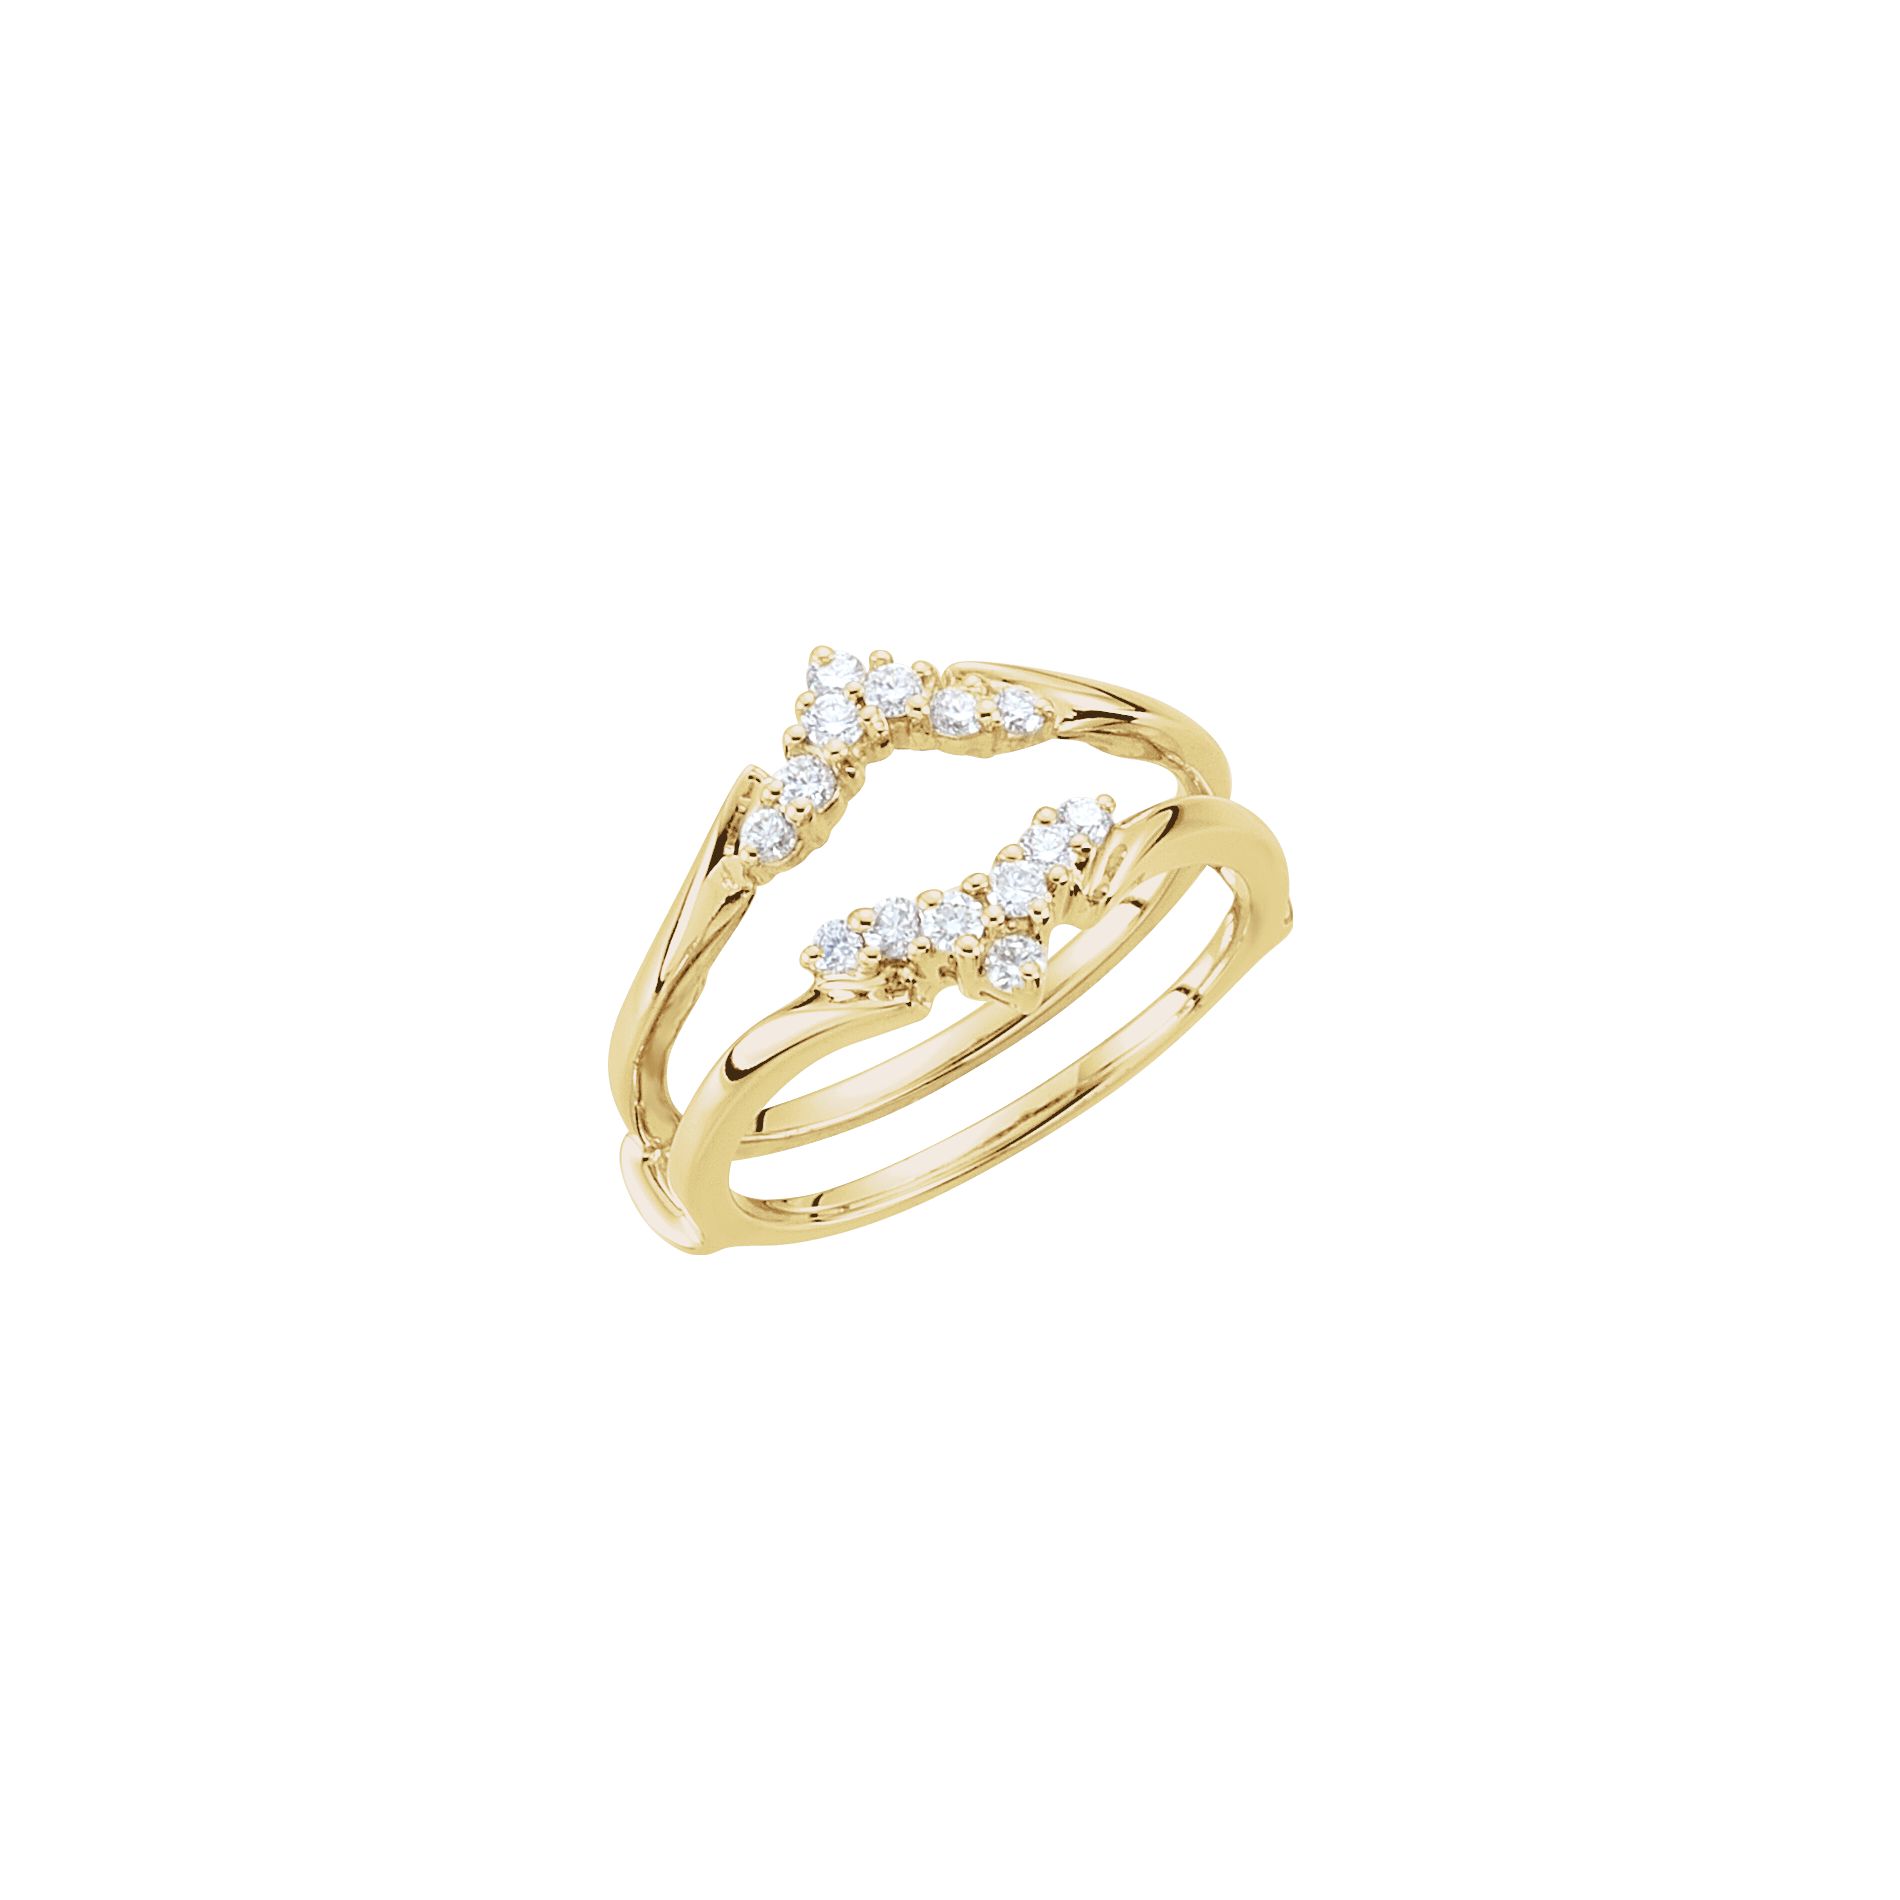 Diamond2Deal 14K Yellow Gold 1/4 CTW Diamond Wedding Engagement Ring Guard Enhancer Band 